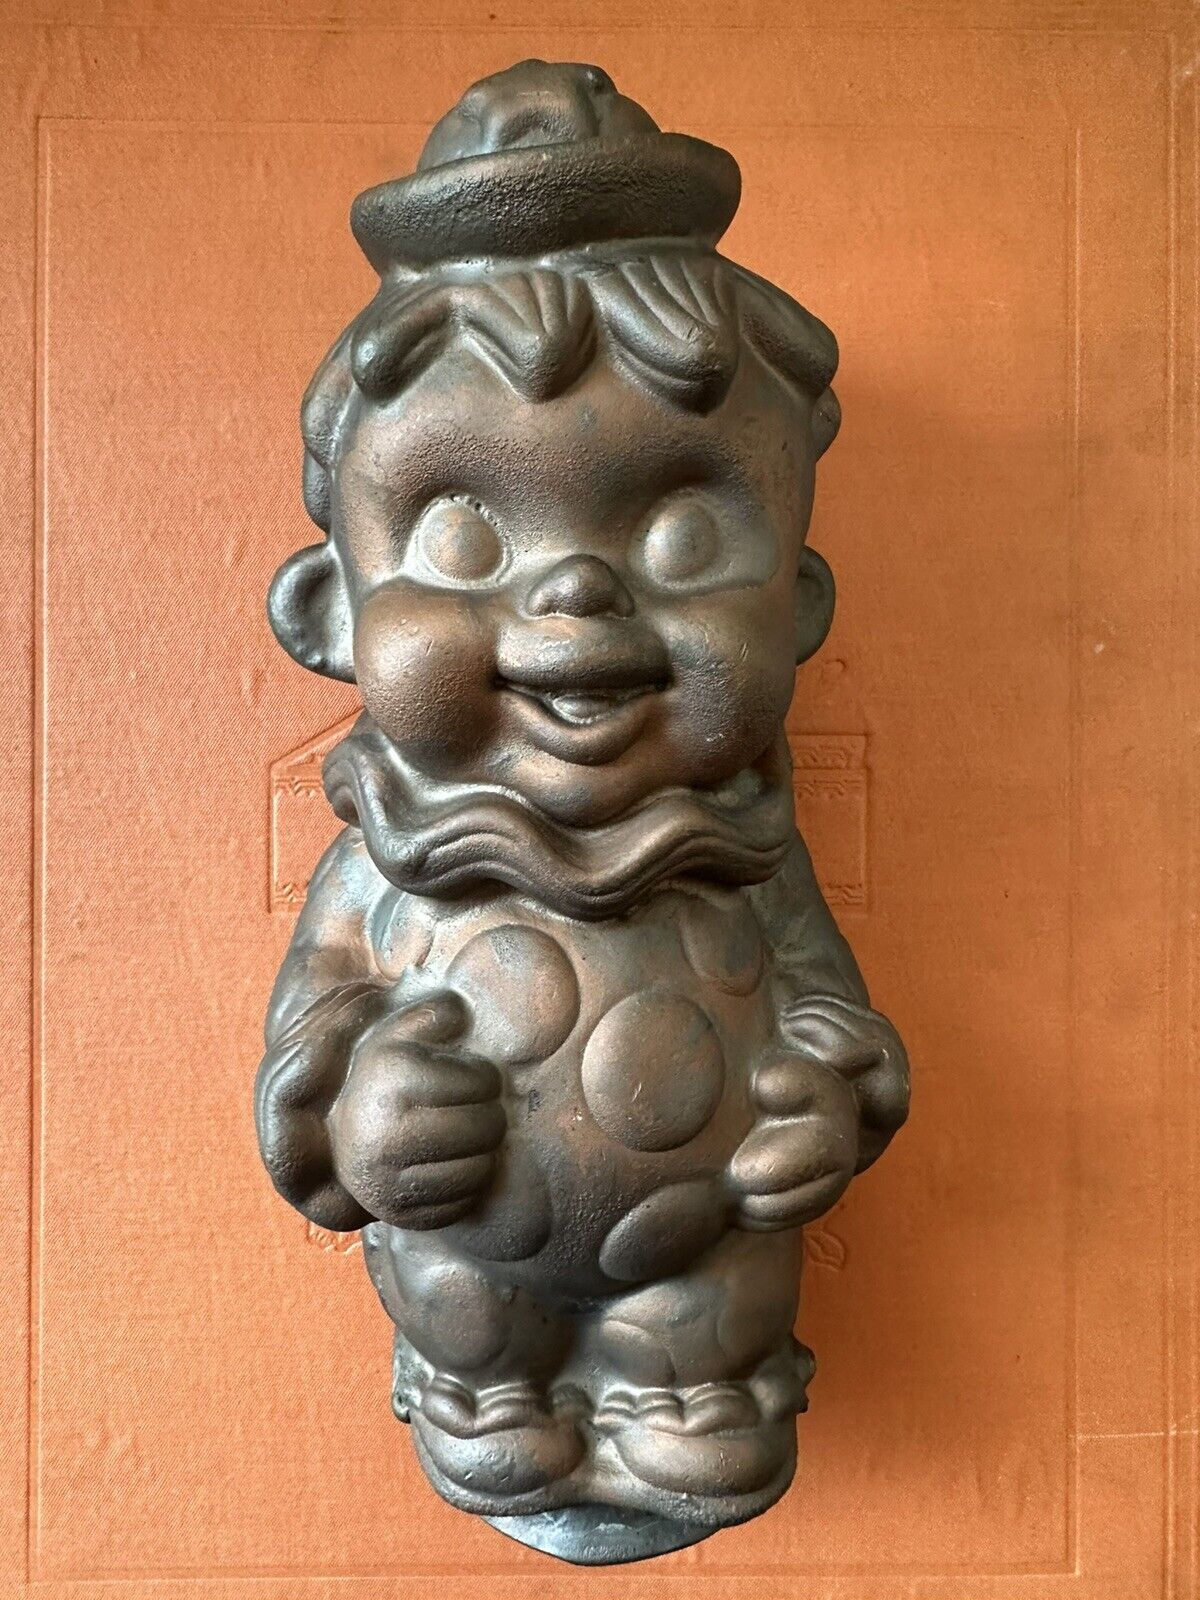 Vintage clown rubber squeak toy copper industrial factory mold